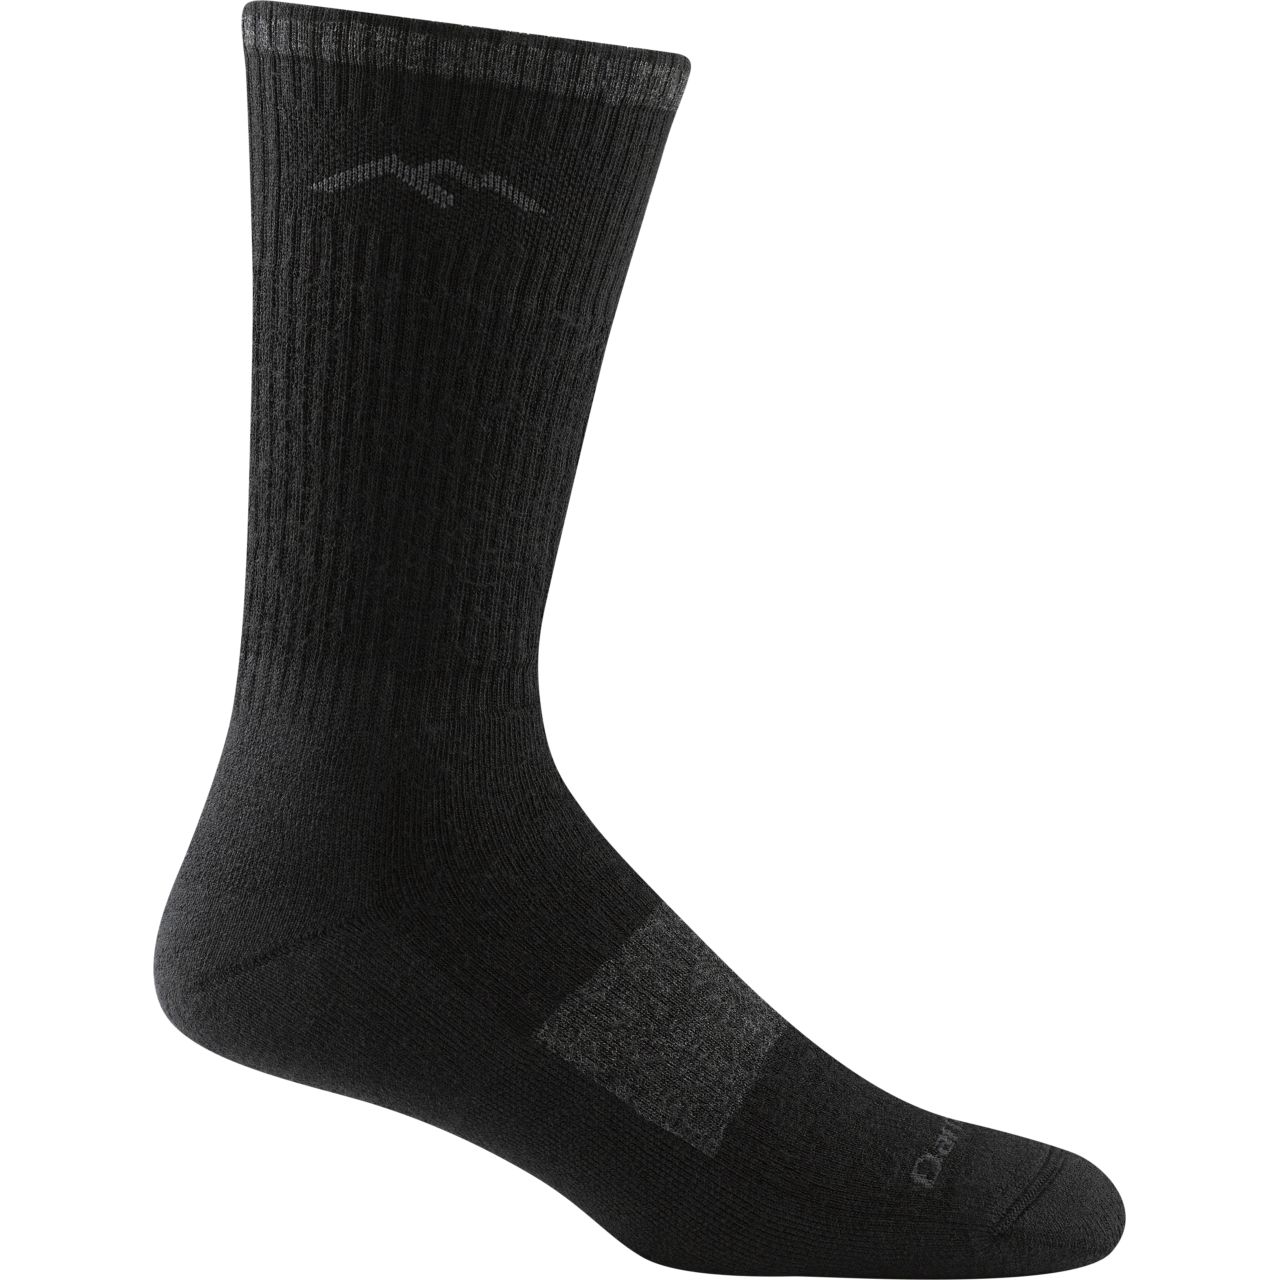 Darn Tough Boot Sock Full Cushion - Men's | Hiking Socks ...